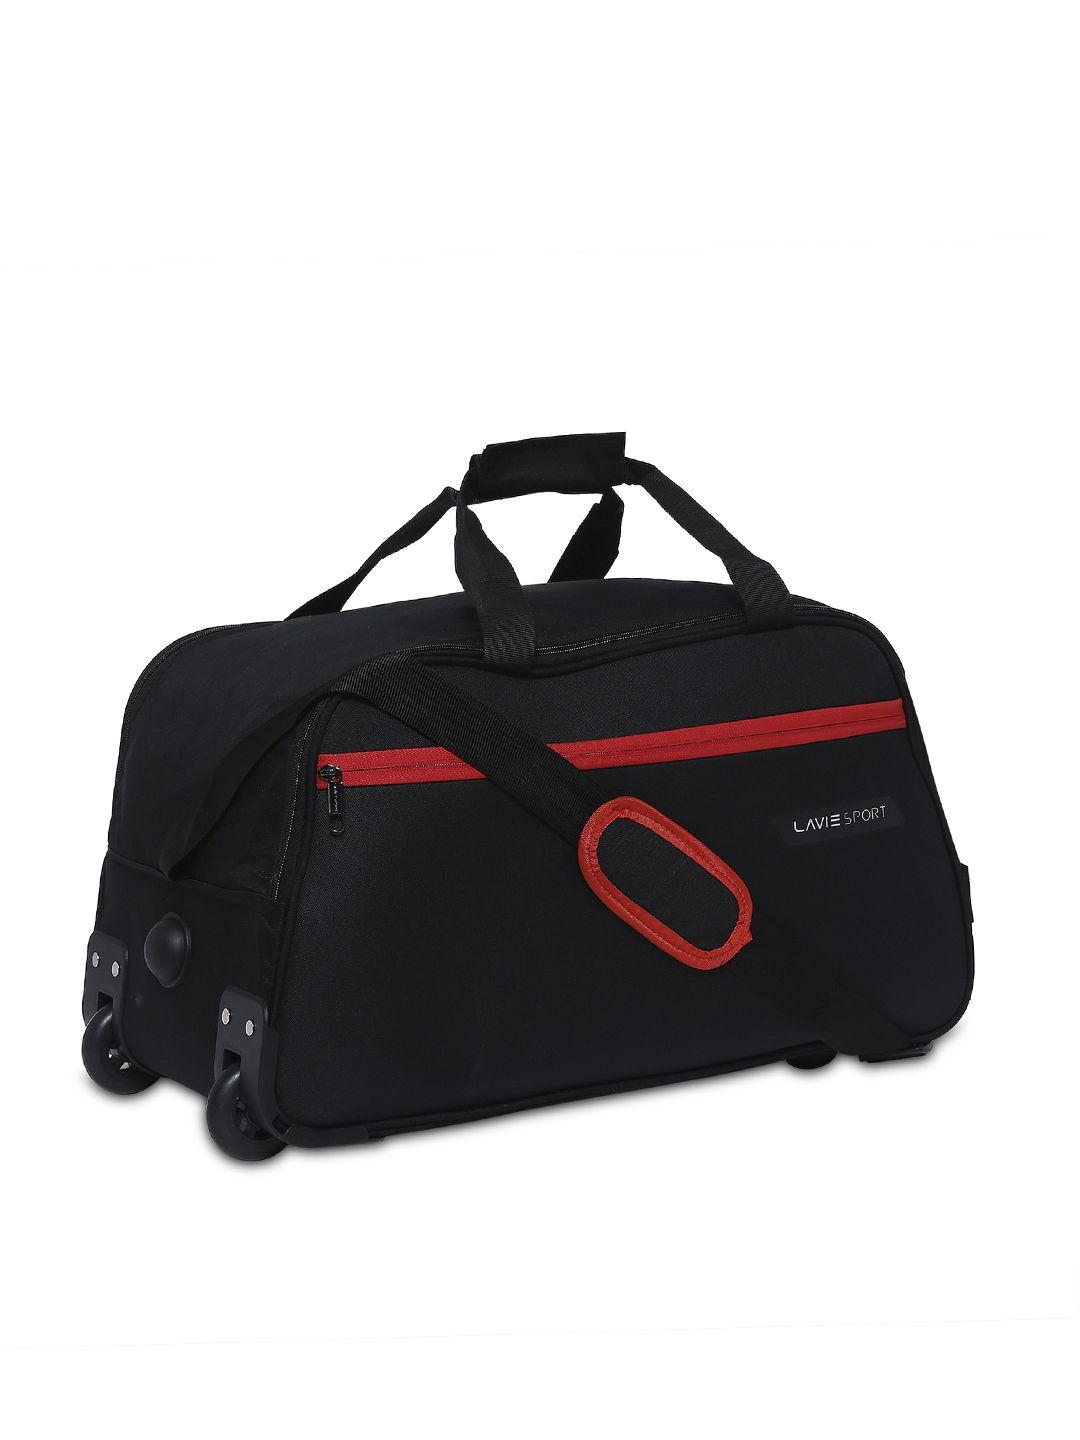 lavie sport unisex black & red wheel duffel bag